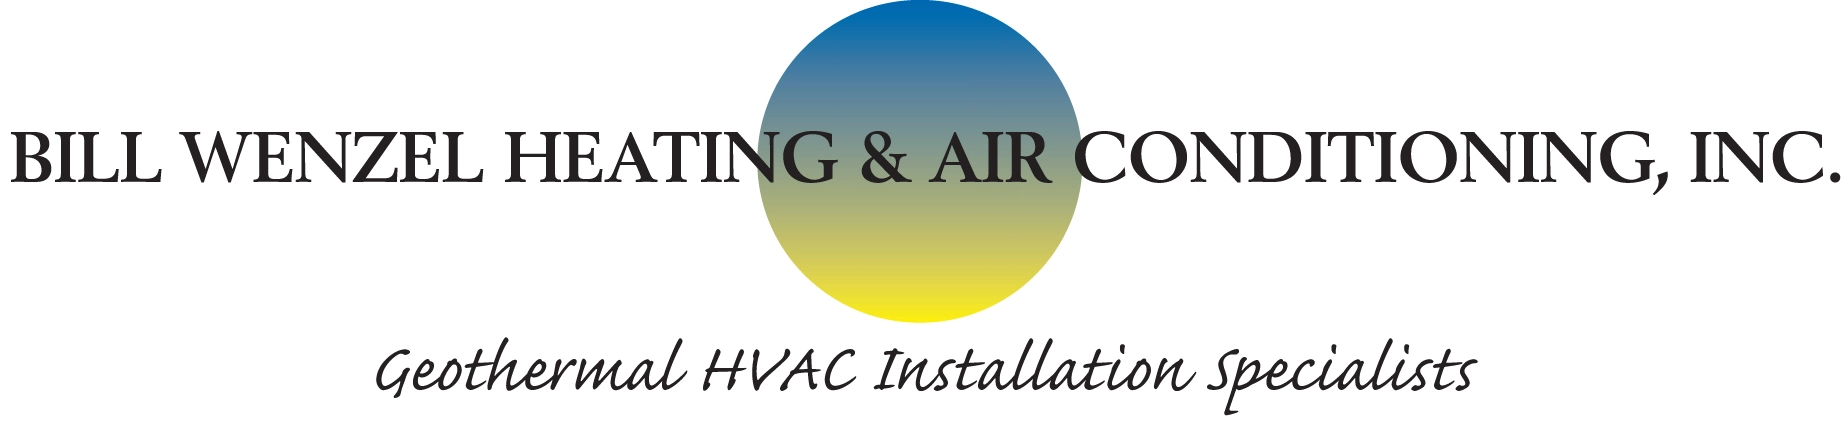 BILL WENZEL HEATING & AIR CONDITIONING, INC. Logo